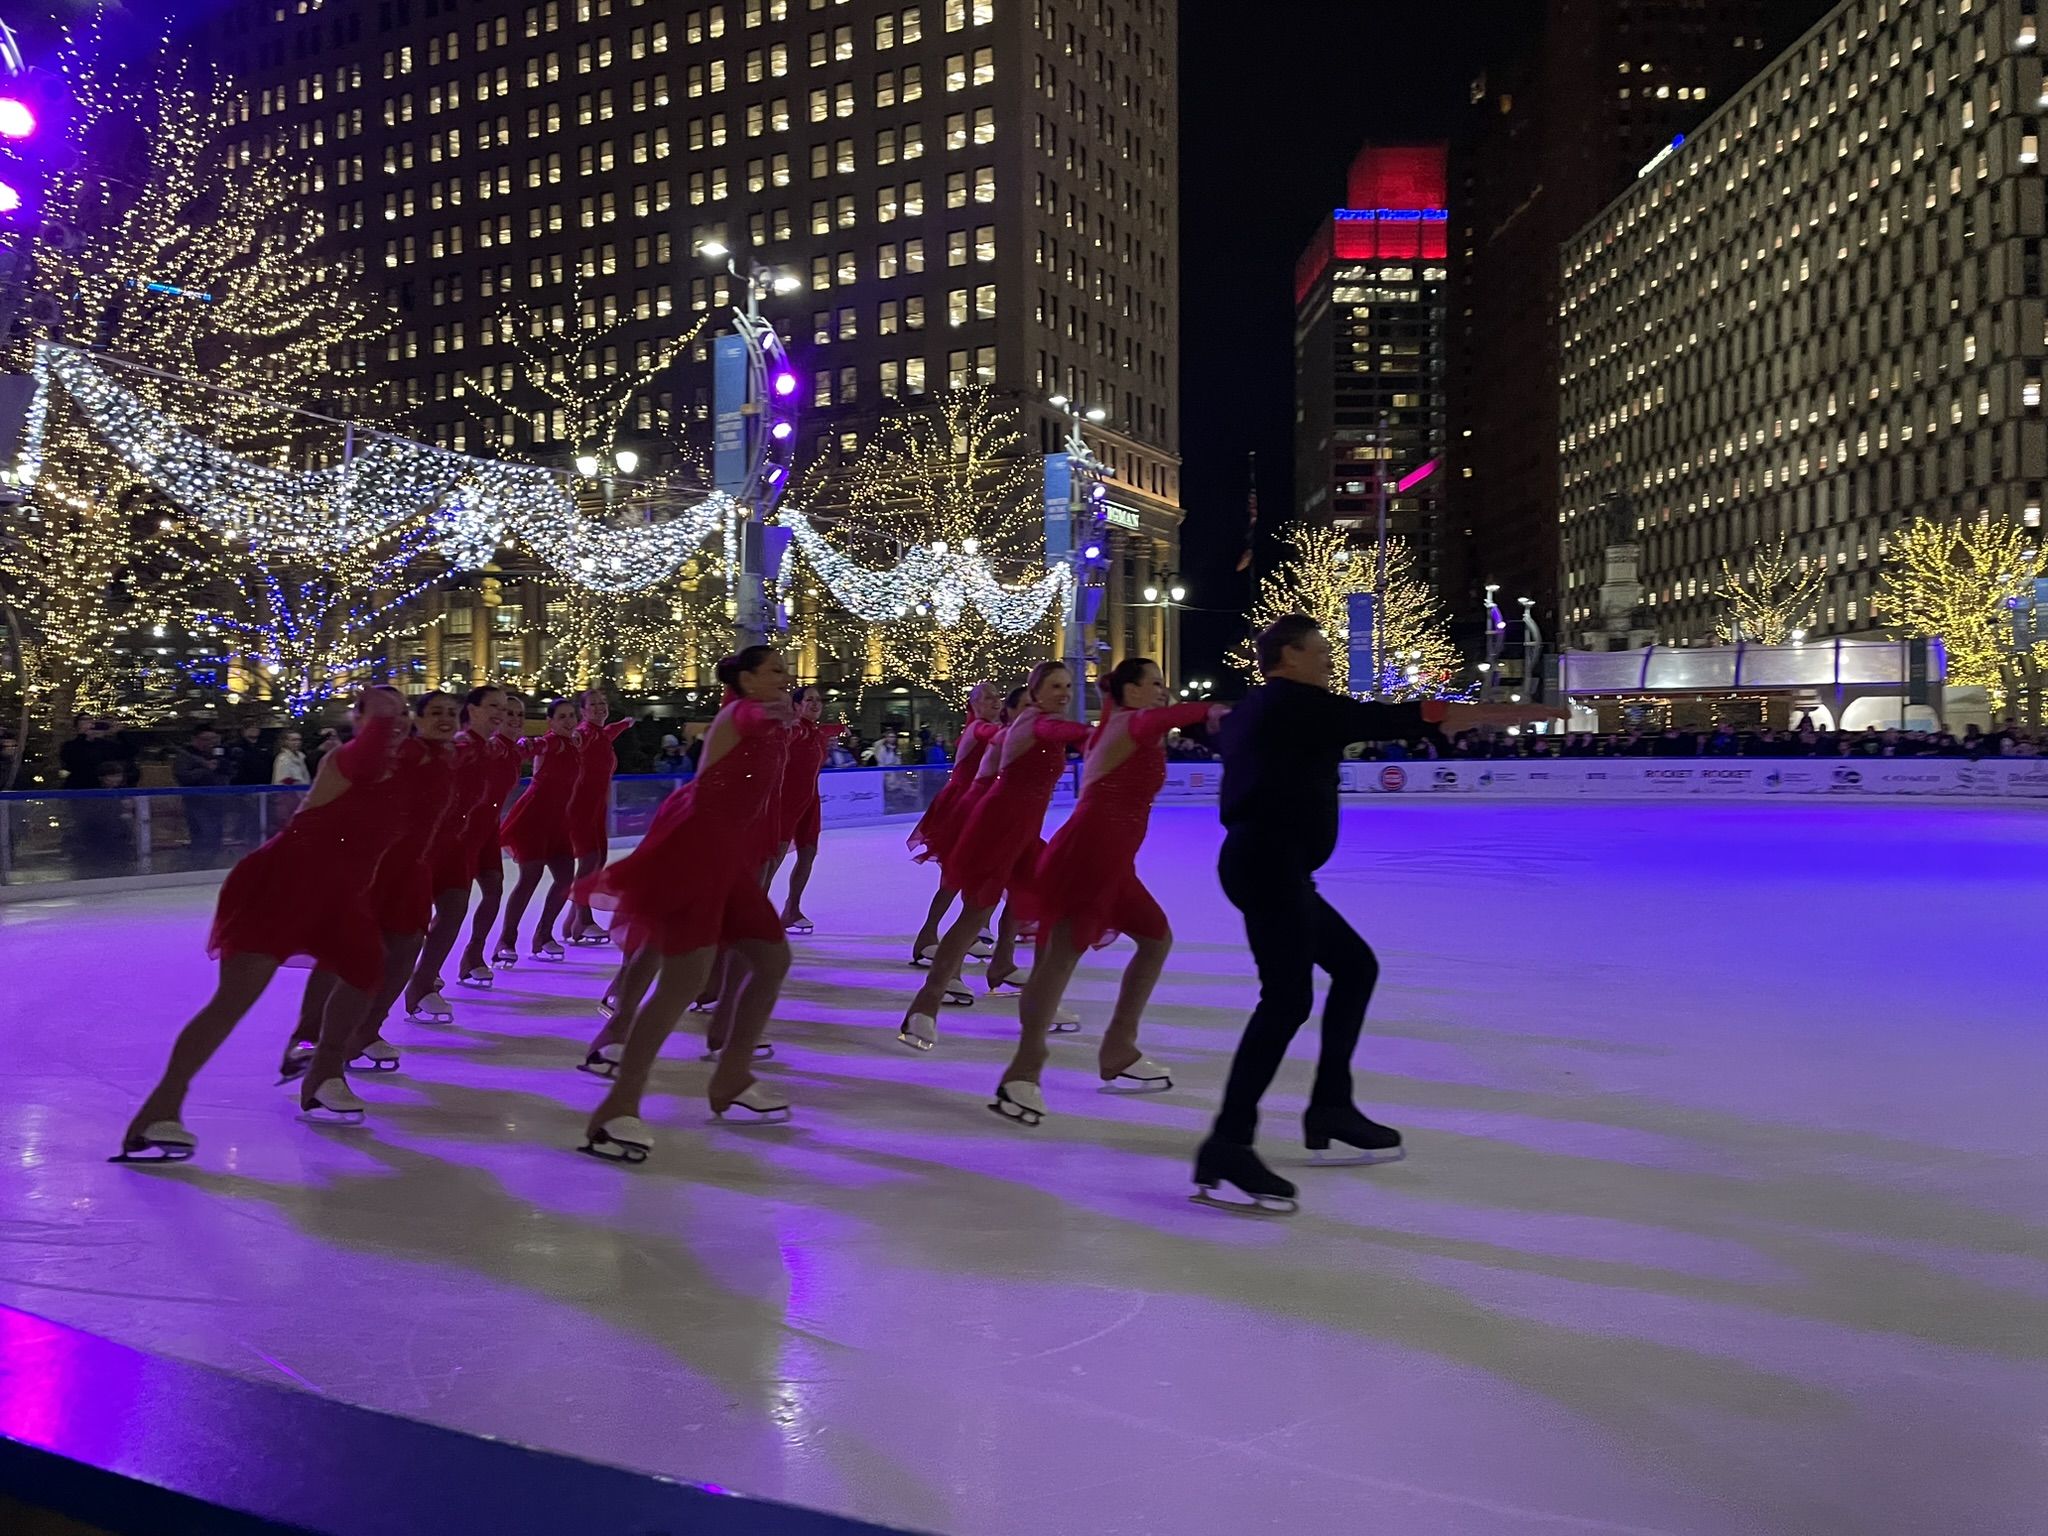 Ice skaters in Detroit